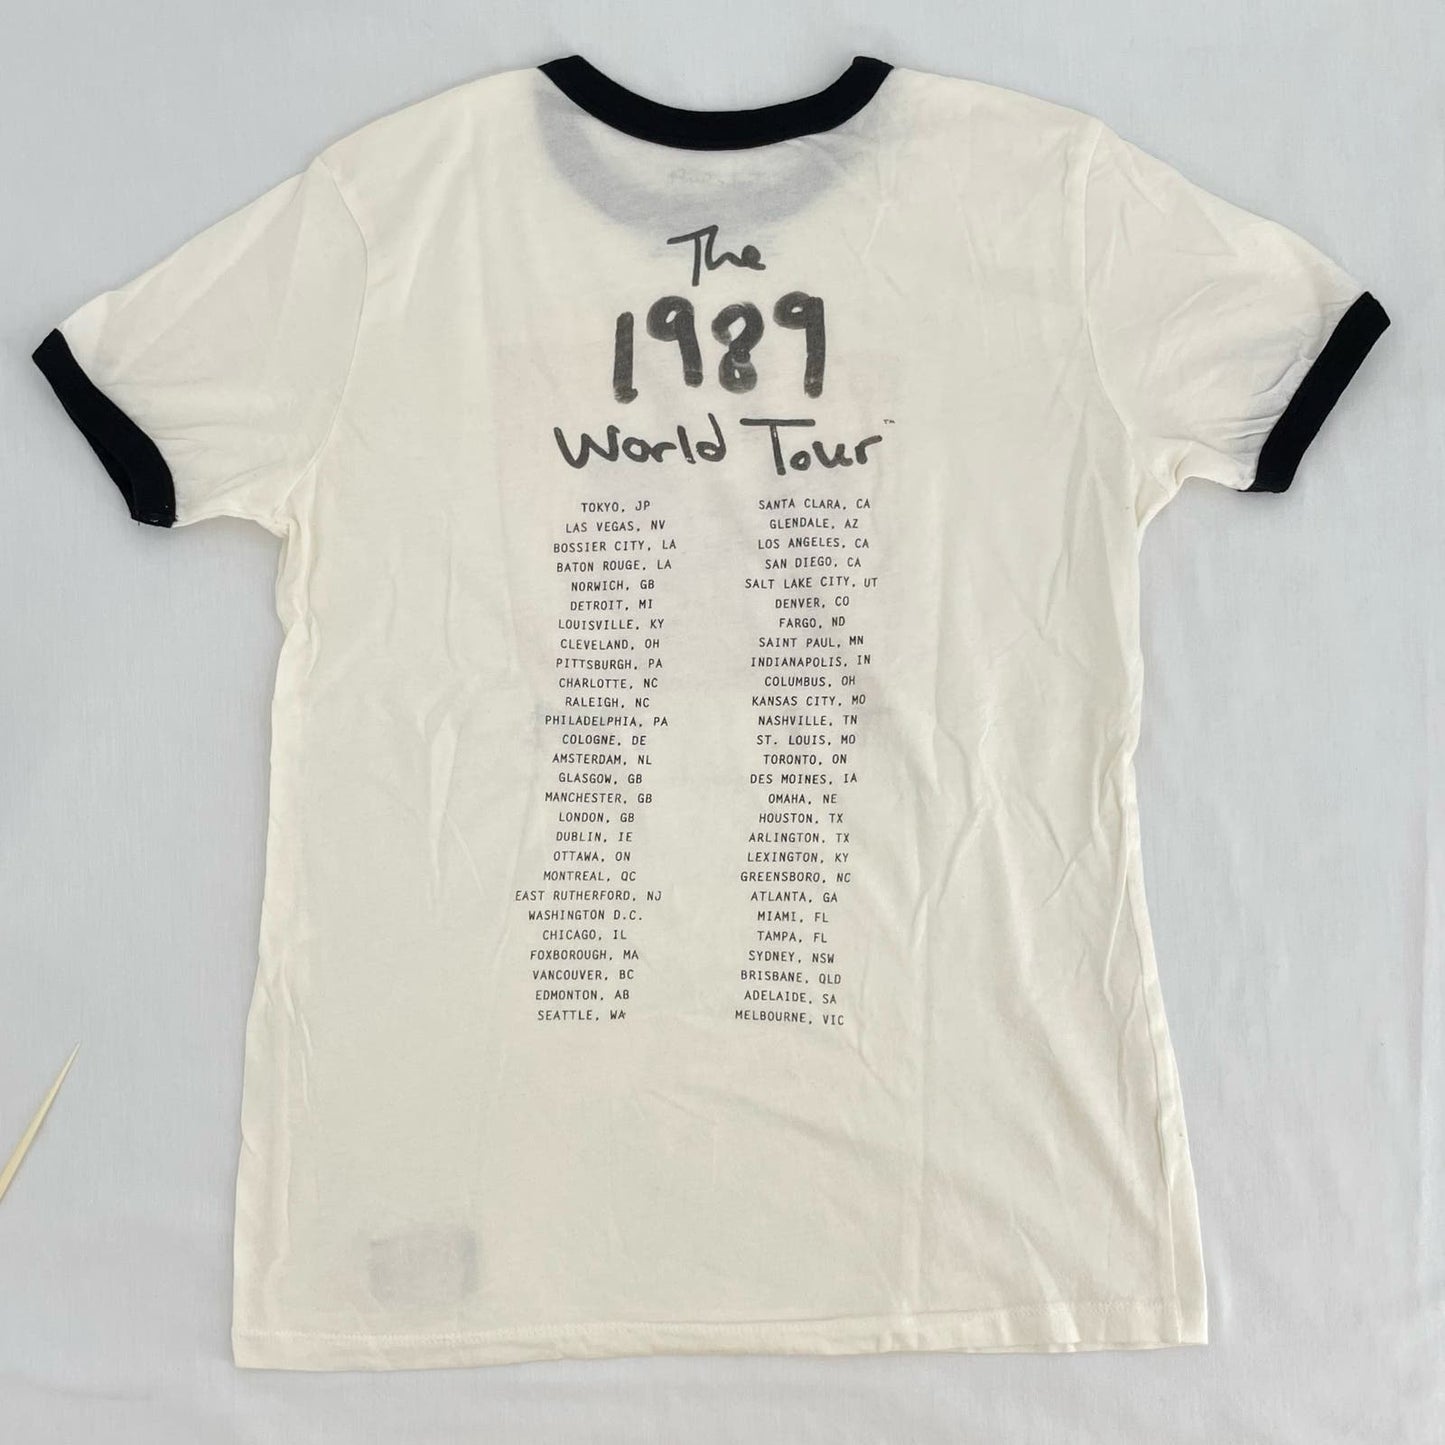 Taylor Swift 1989 Ringer Tee Polaroid Graphic World Tour Concert T-Shirt Size S